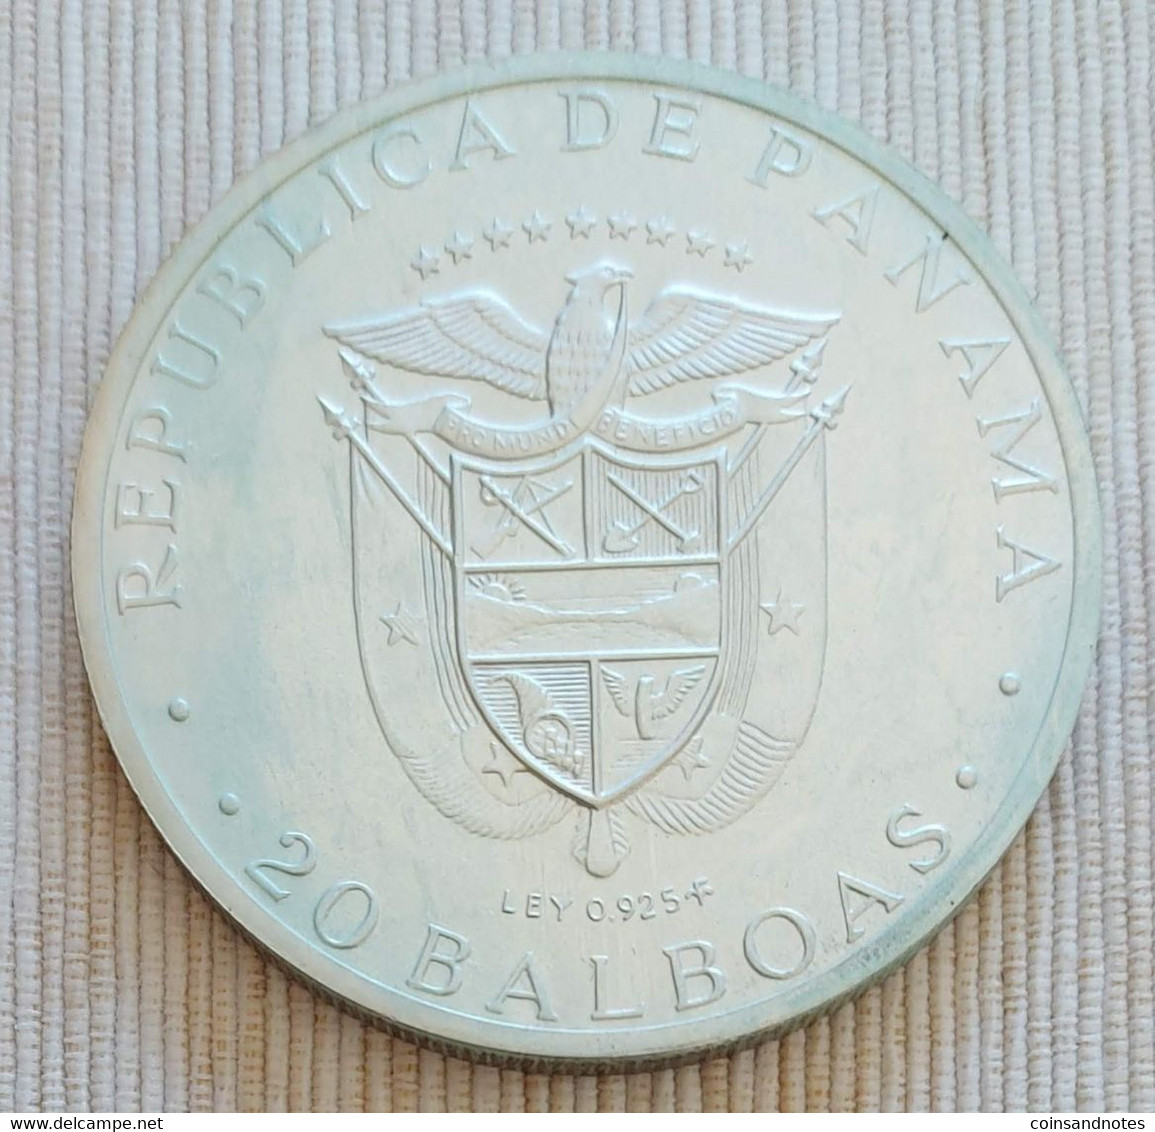 Panama 1973 - 20 Balboas - Simón Bolívar (1783-1830) - .925 Silver - KM# 31 - Sonstige – Amerika